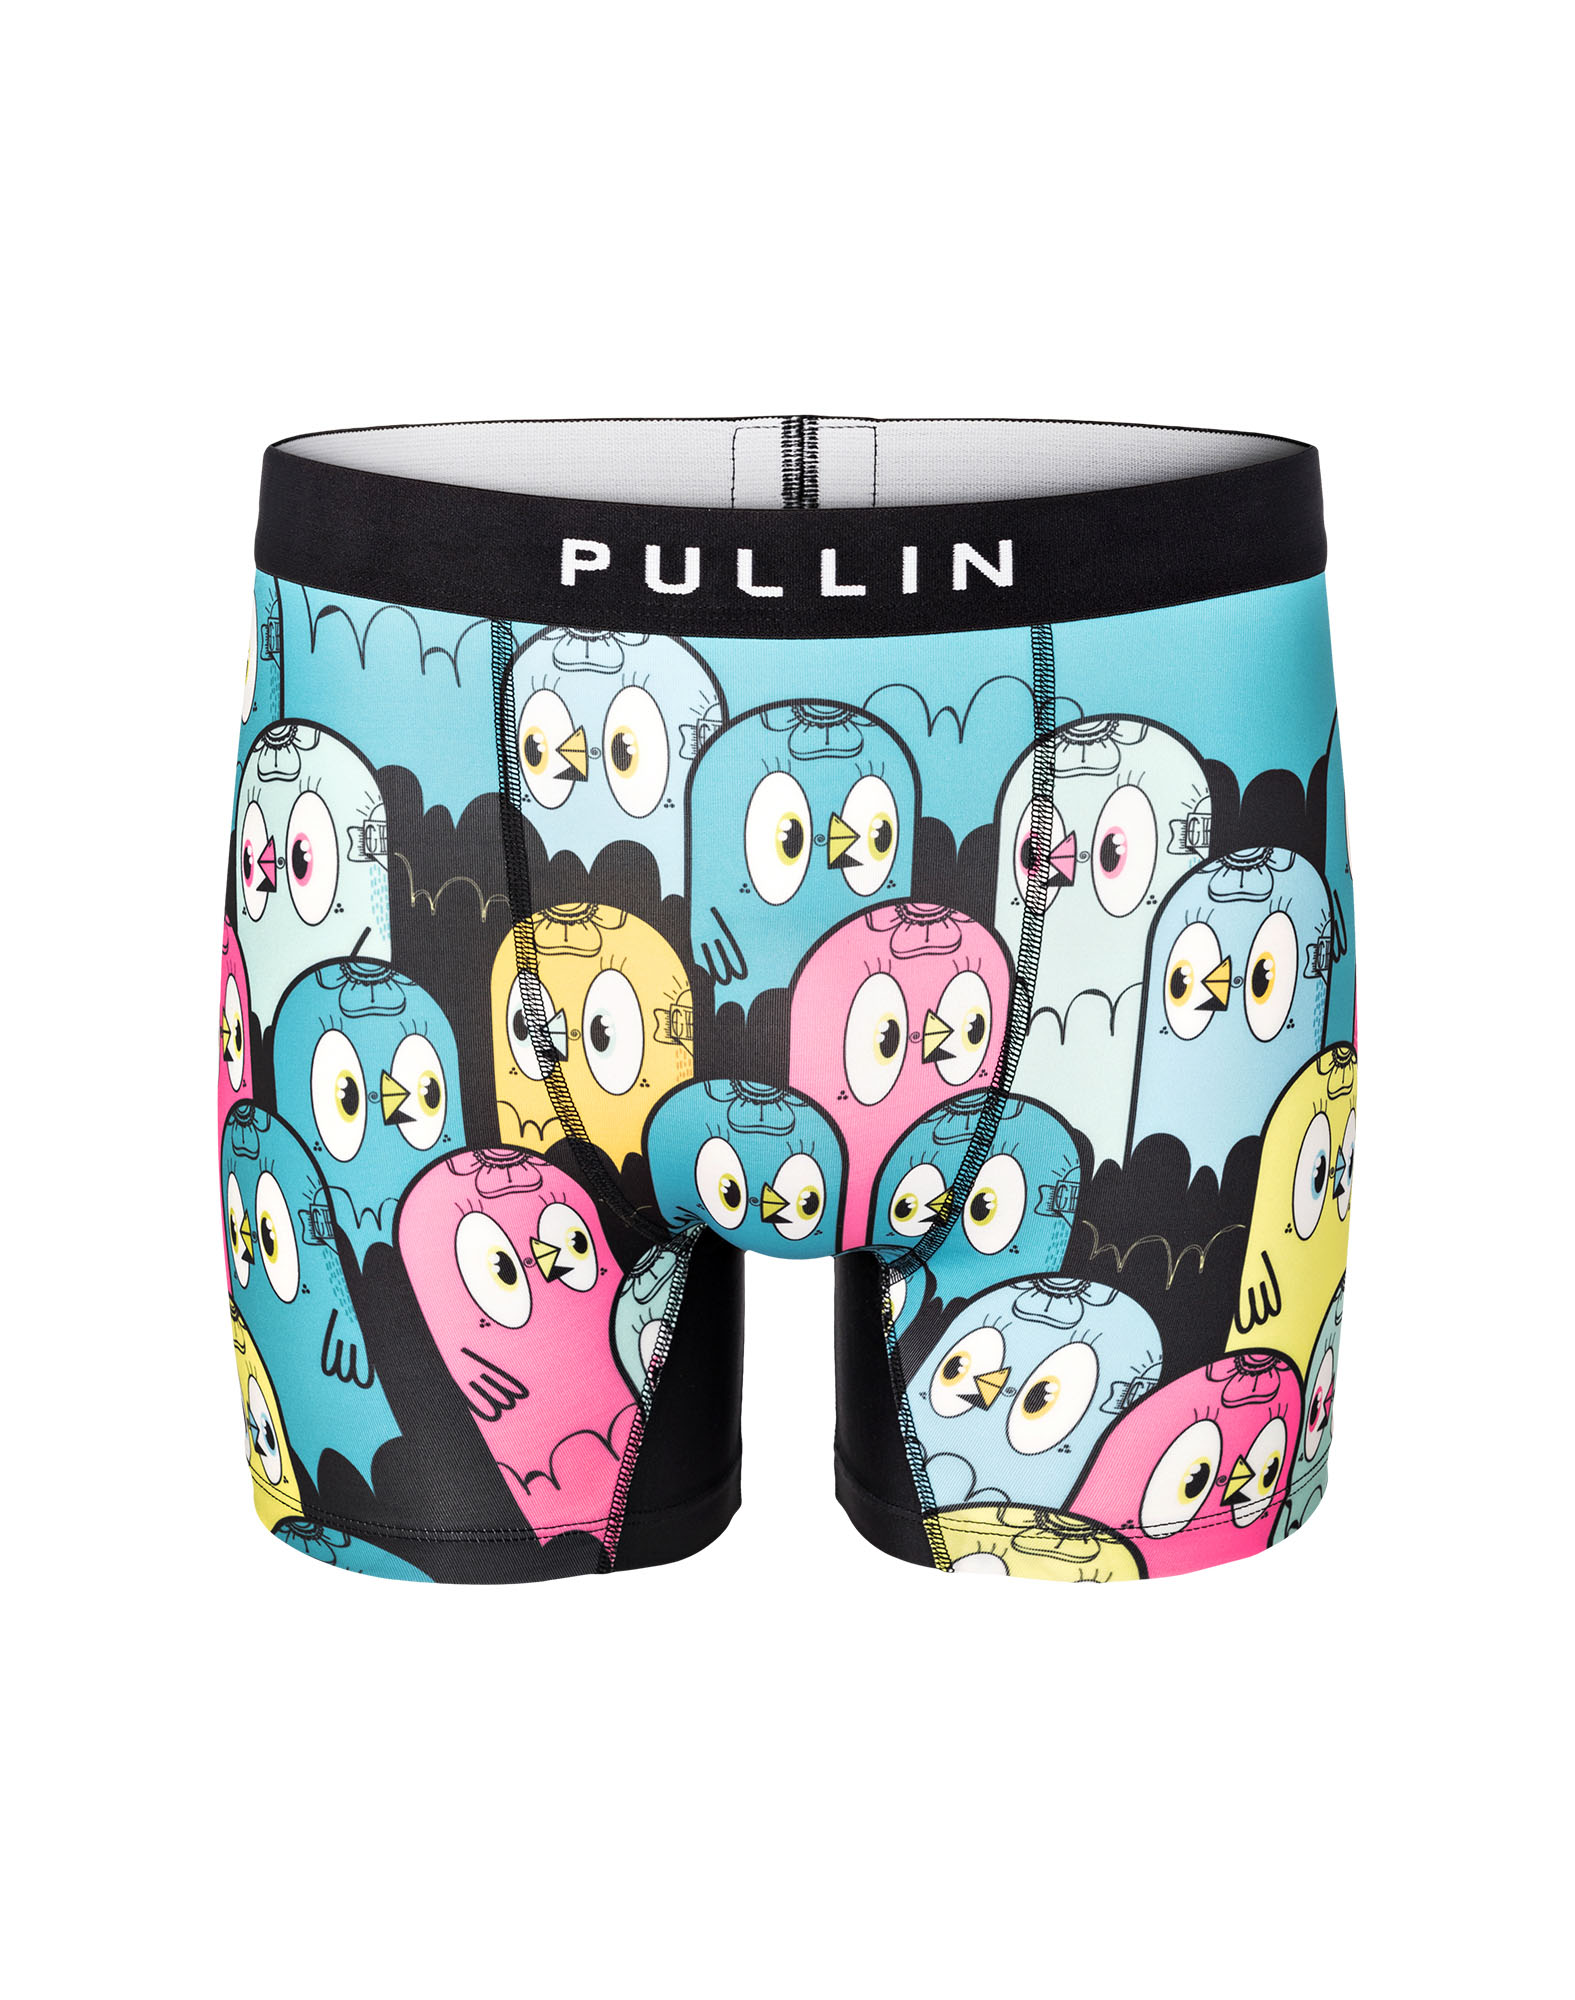 PULLIN Boxer underwear homme FA 2 EGGY Fashion PULL IN 